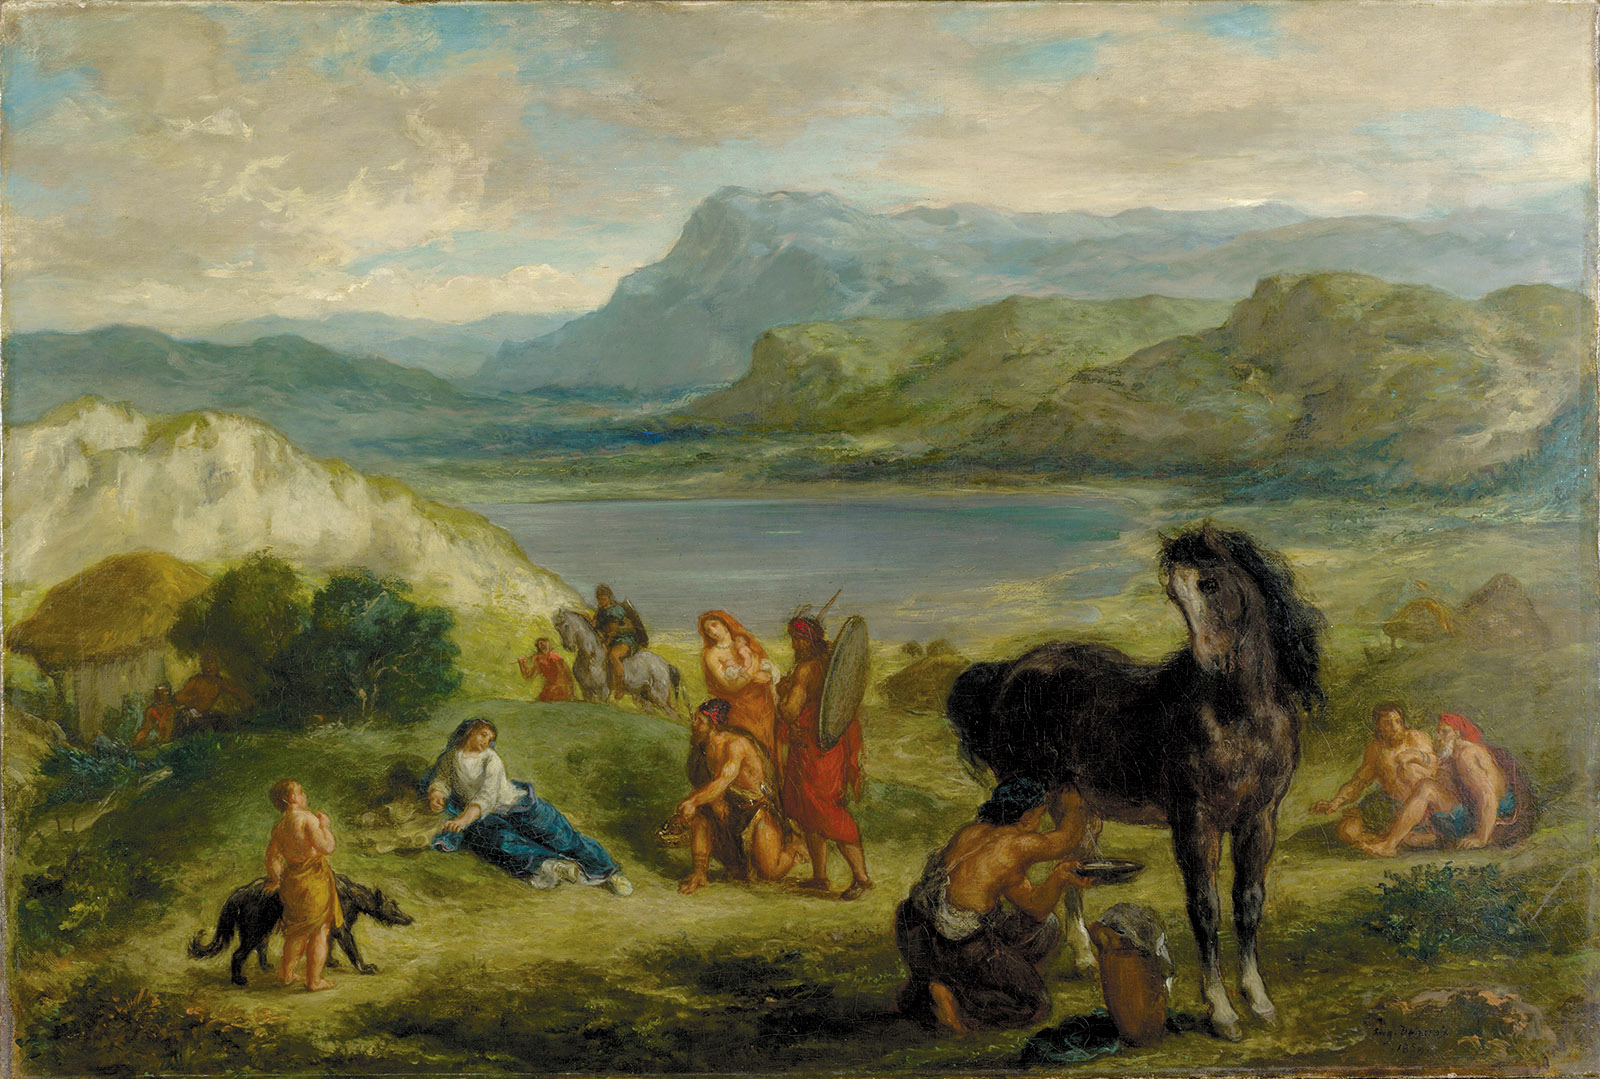 Eugène Delacroix: Ovid Among the Scythians, 1859